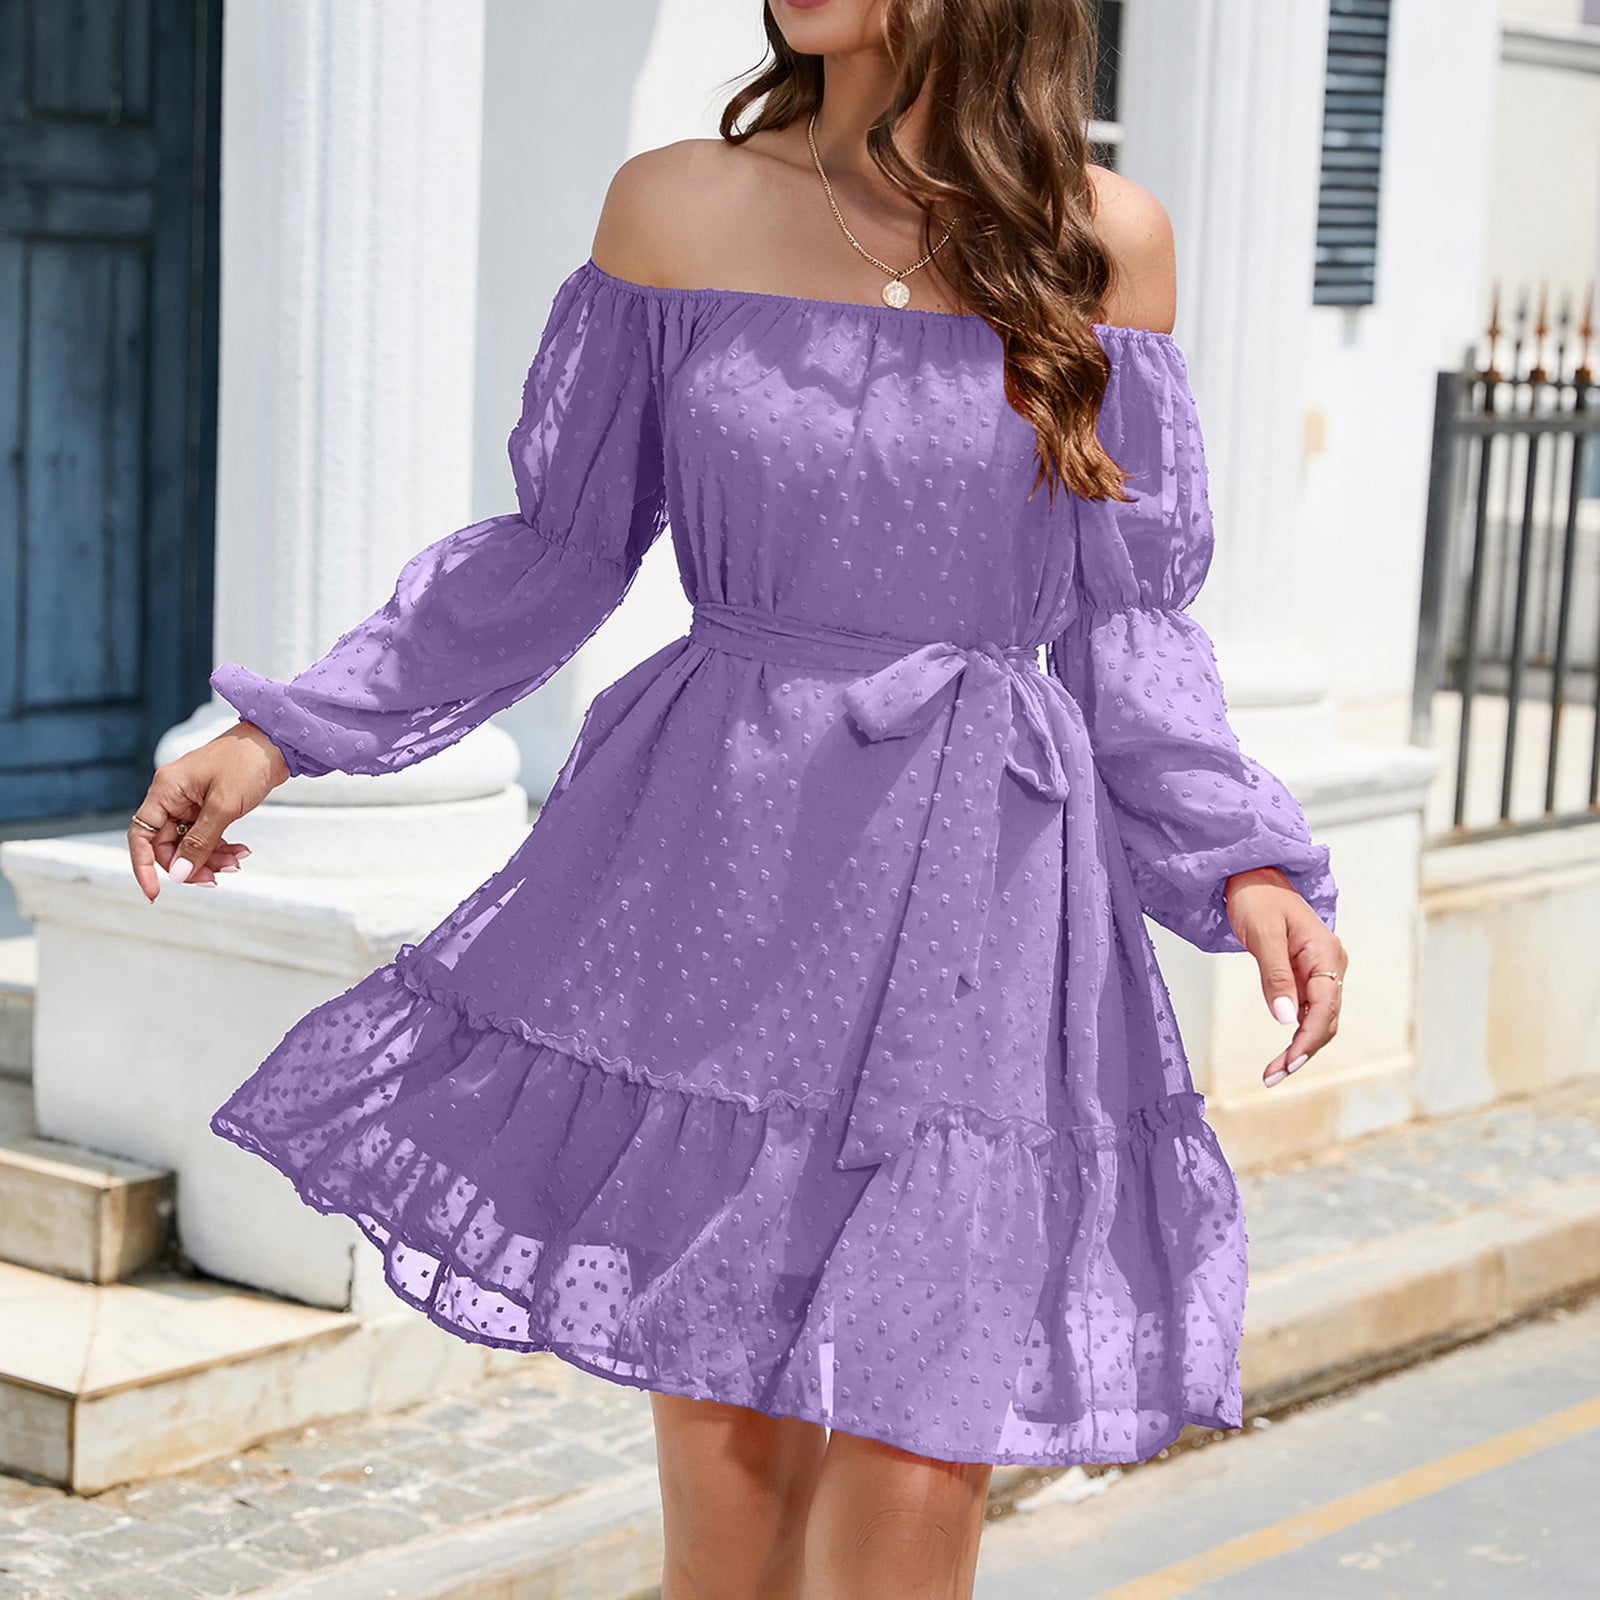 womens purple dresses